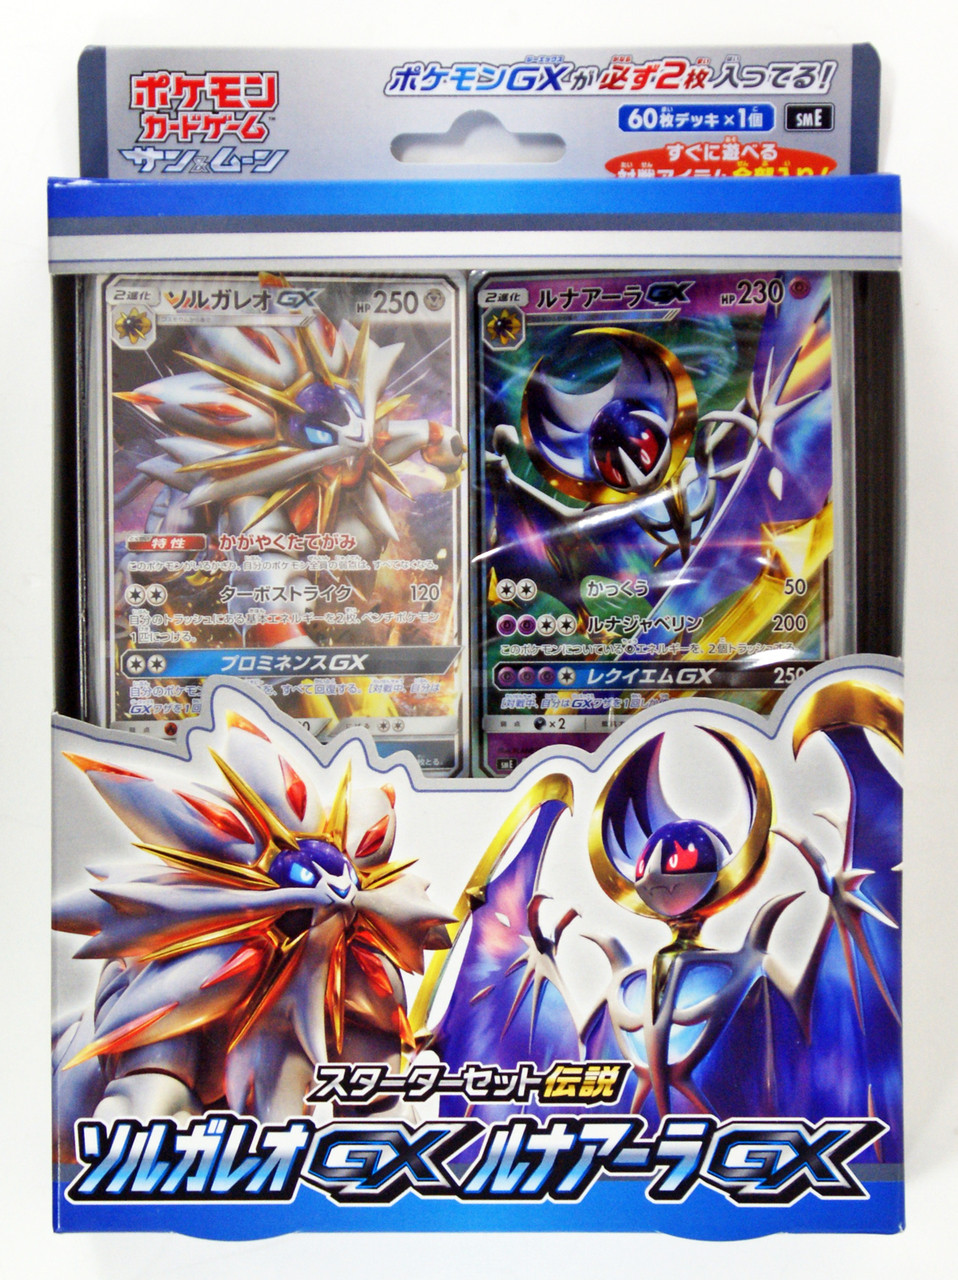 Lunala, Solgaleo & Necrozma - 3 Card Holo Pokémon Card Set